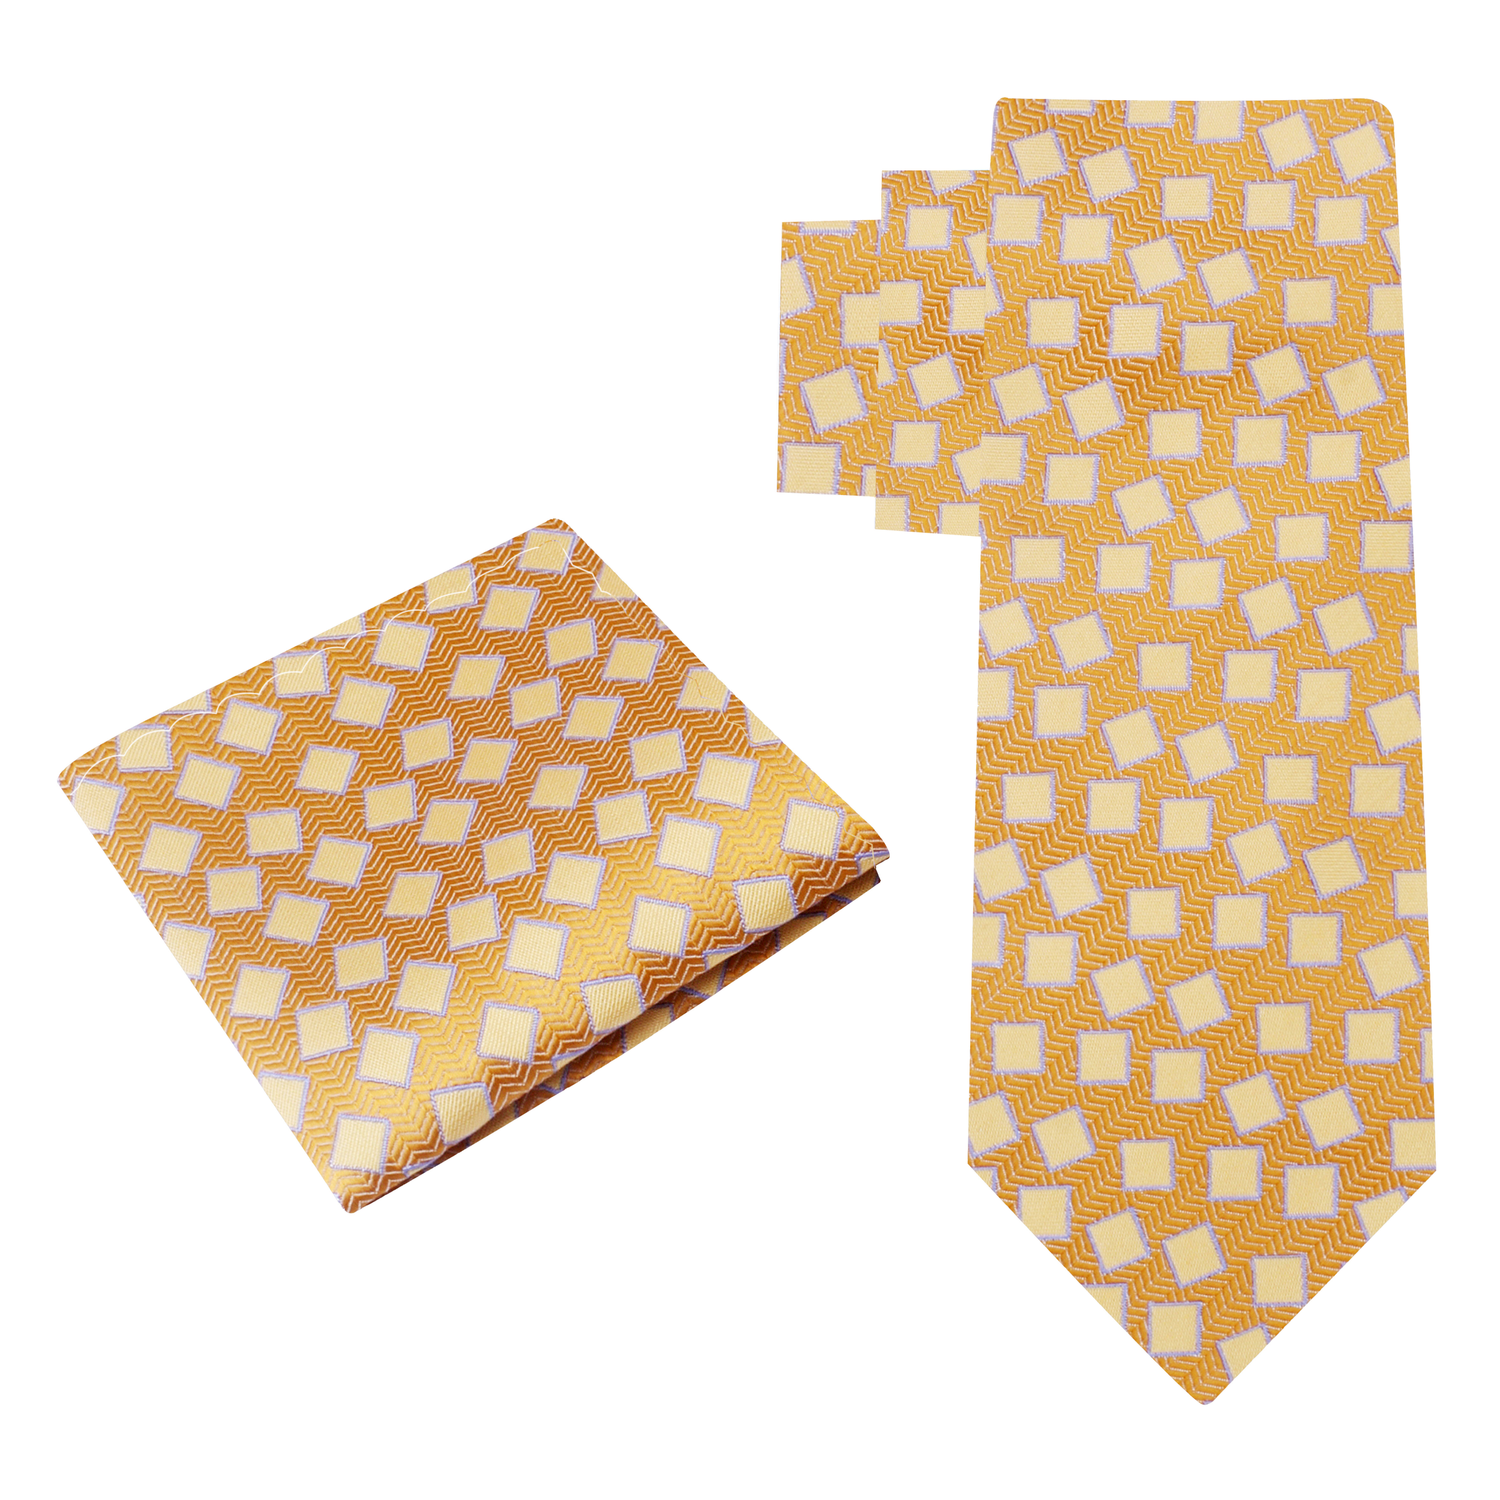 View 2: Light Yellow, Orange Geometric Blocks Tie and Pocket Square